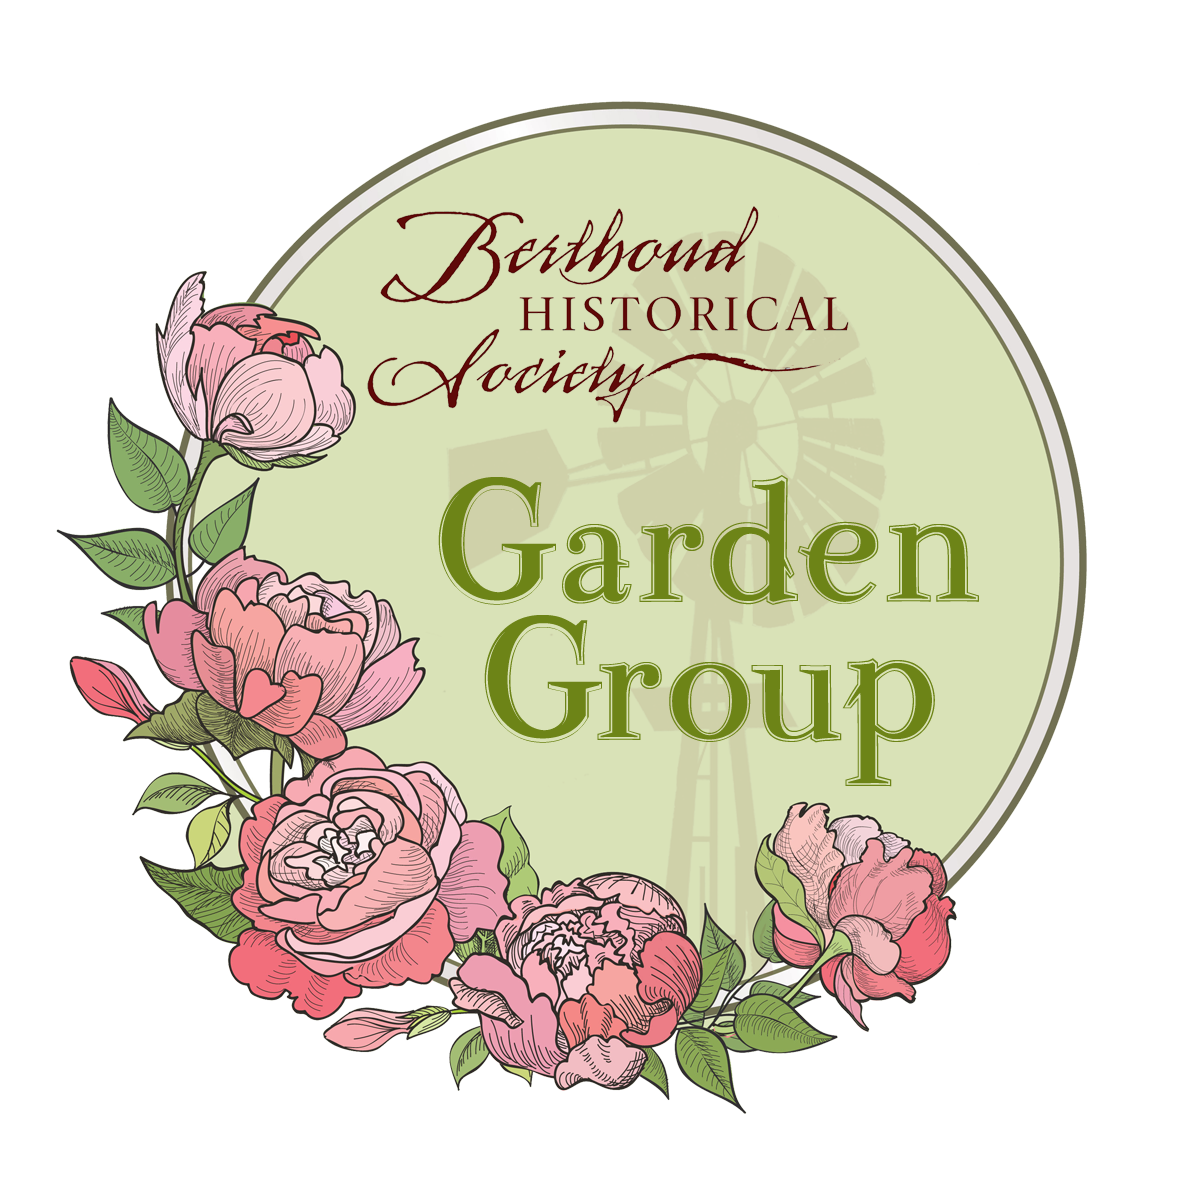 GardenGroupLogo1